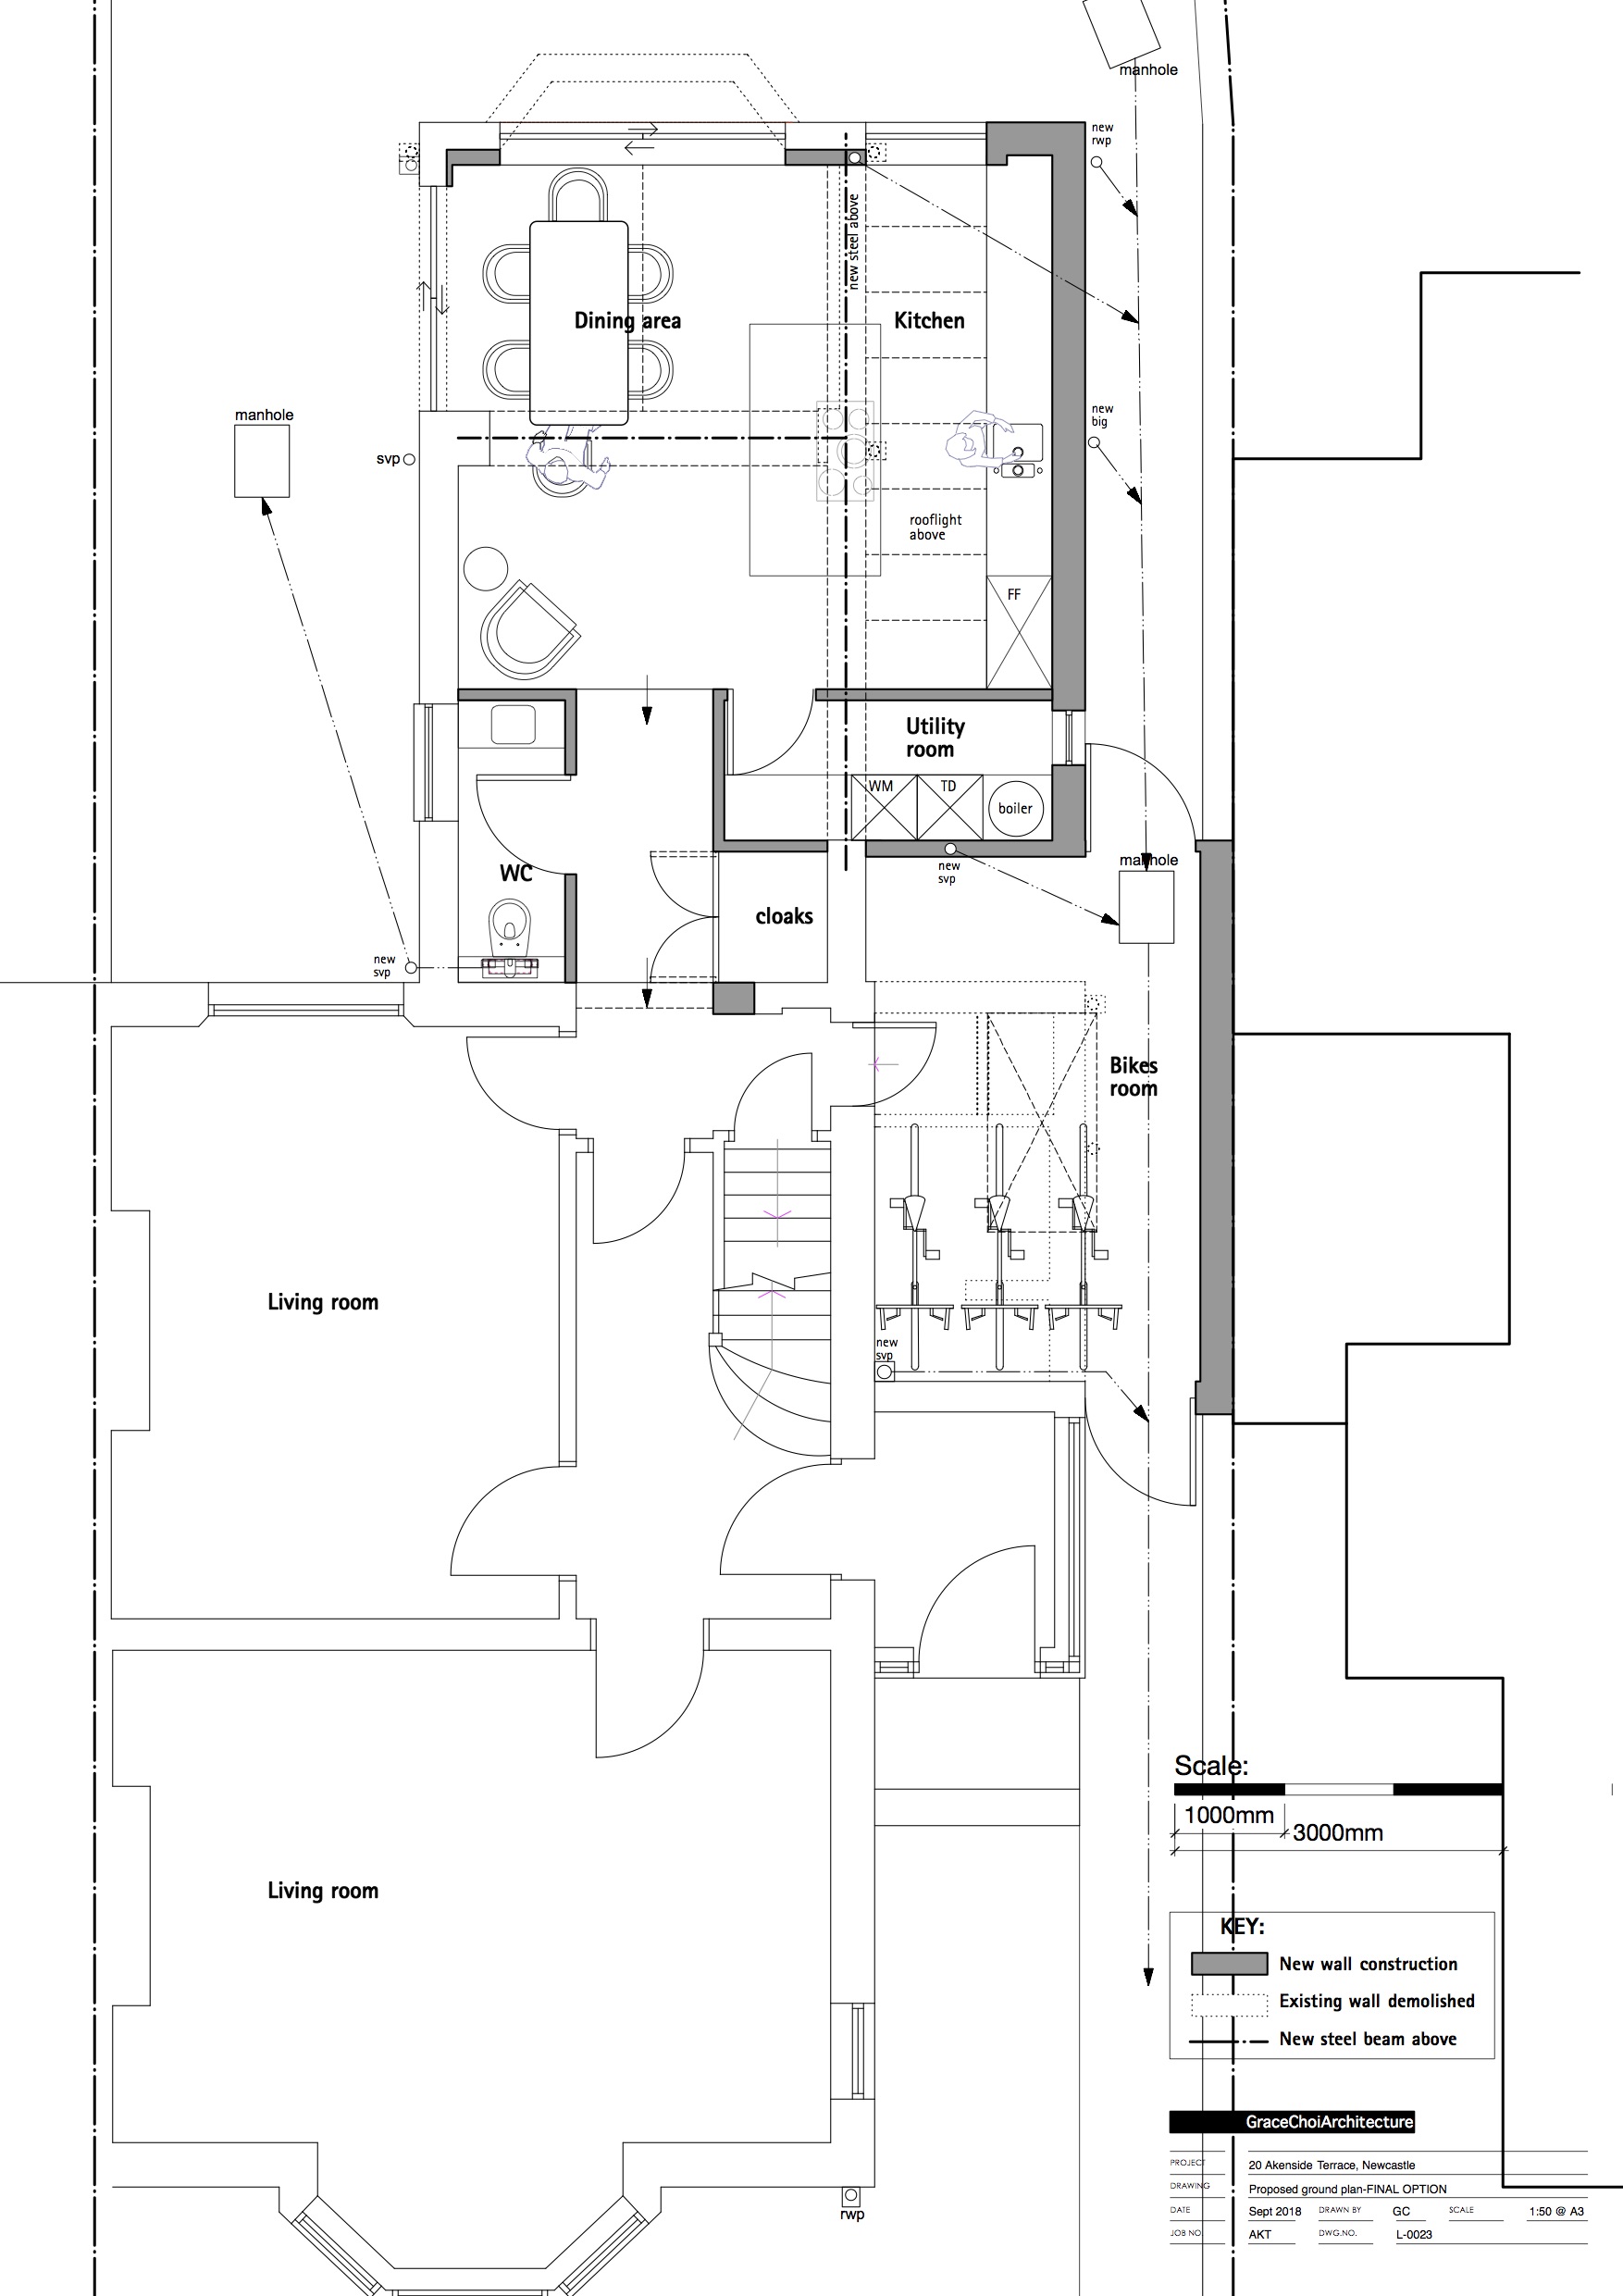 AKT L-0023 Proposed ground plan.jpg